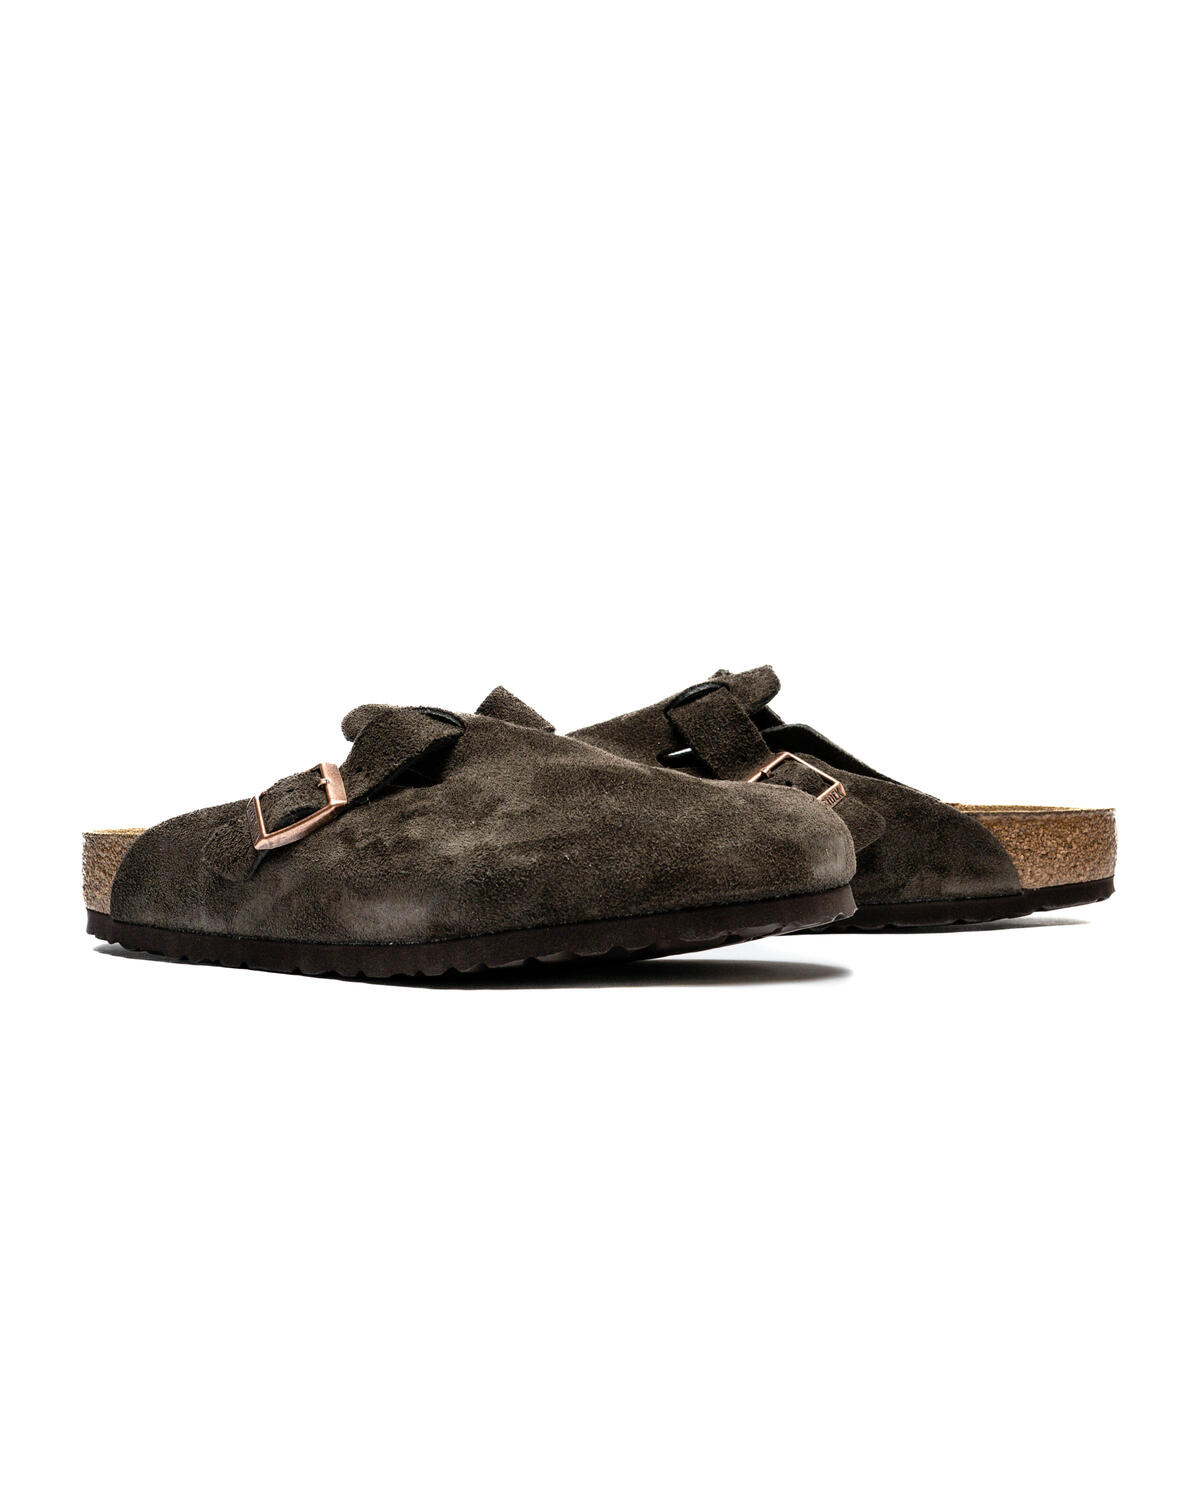  Birkenstock Unisex Clogs and Mules Sandals, Mocca, 10.5 US Men